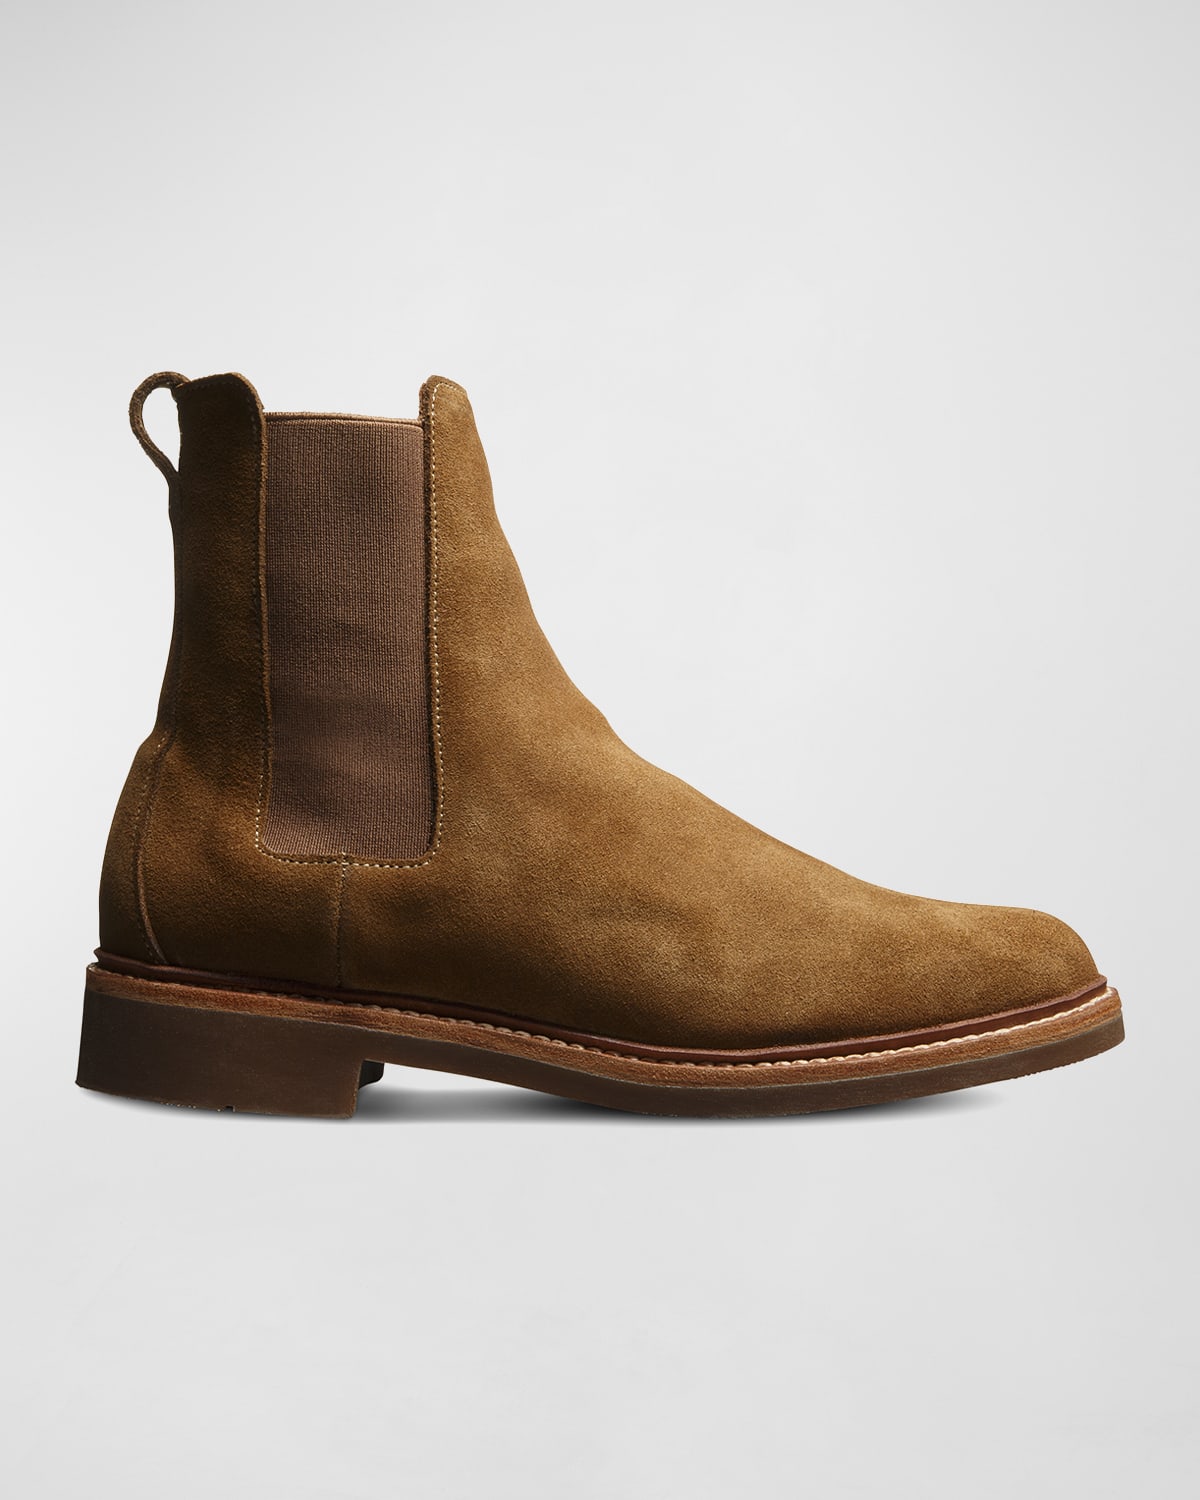 Belstaff Men's Longton Leather Chelsea Boots | Neiman Marcus